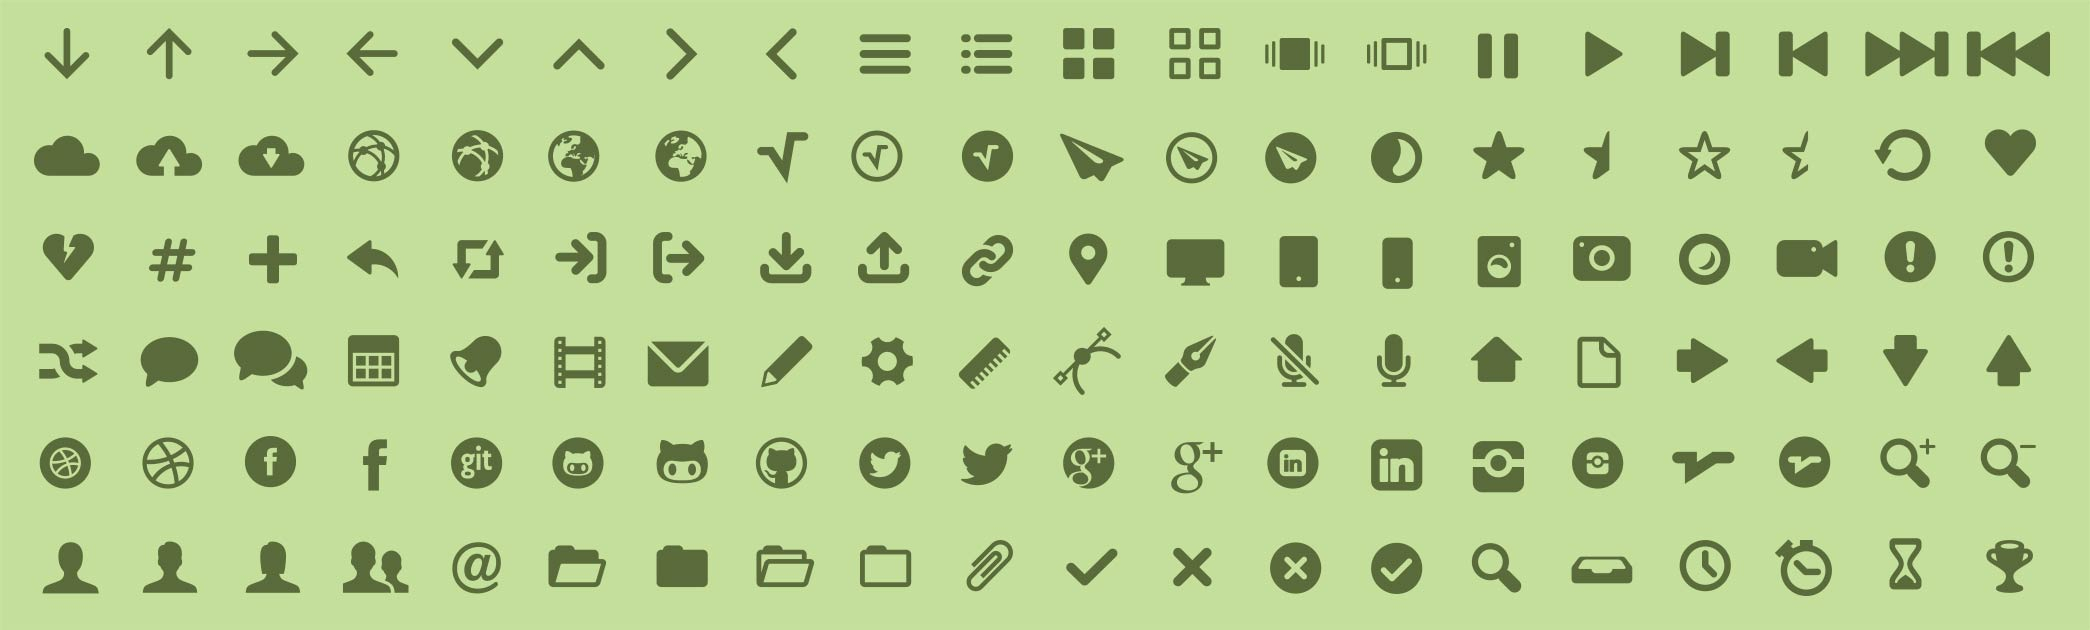 Mfg Labs Icon Set in Calendar Icon Unicode